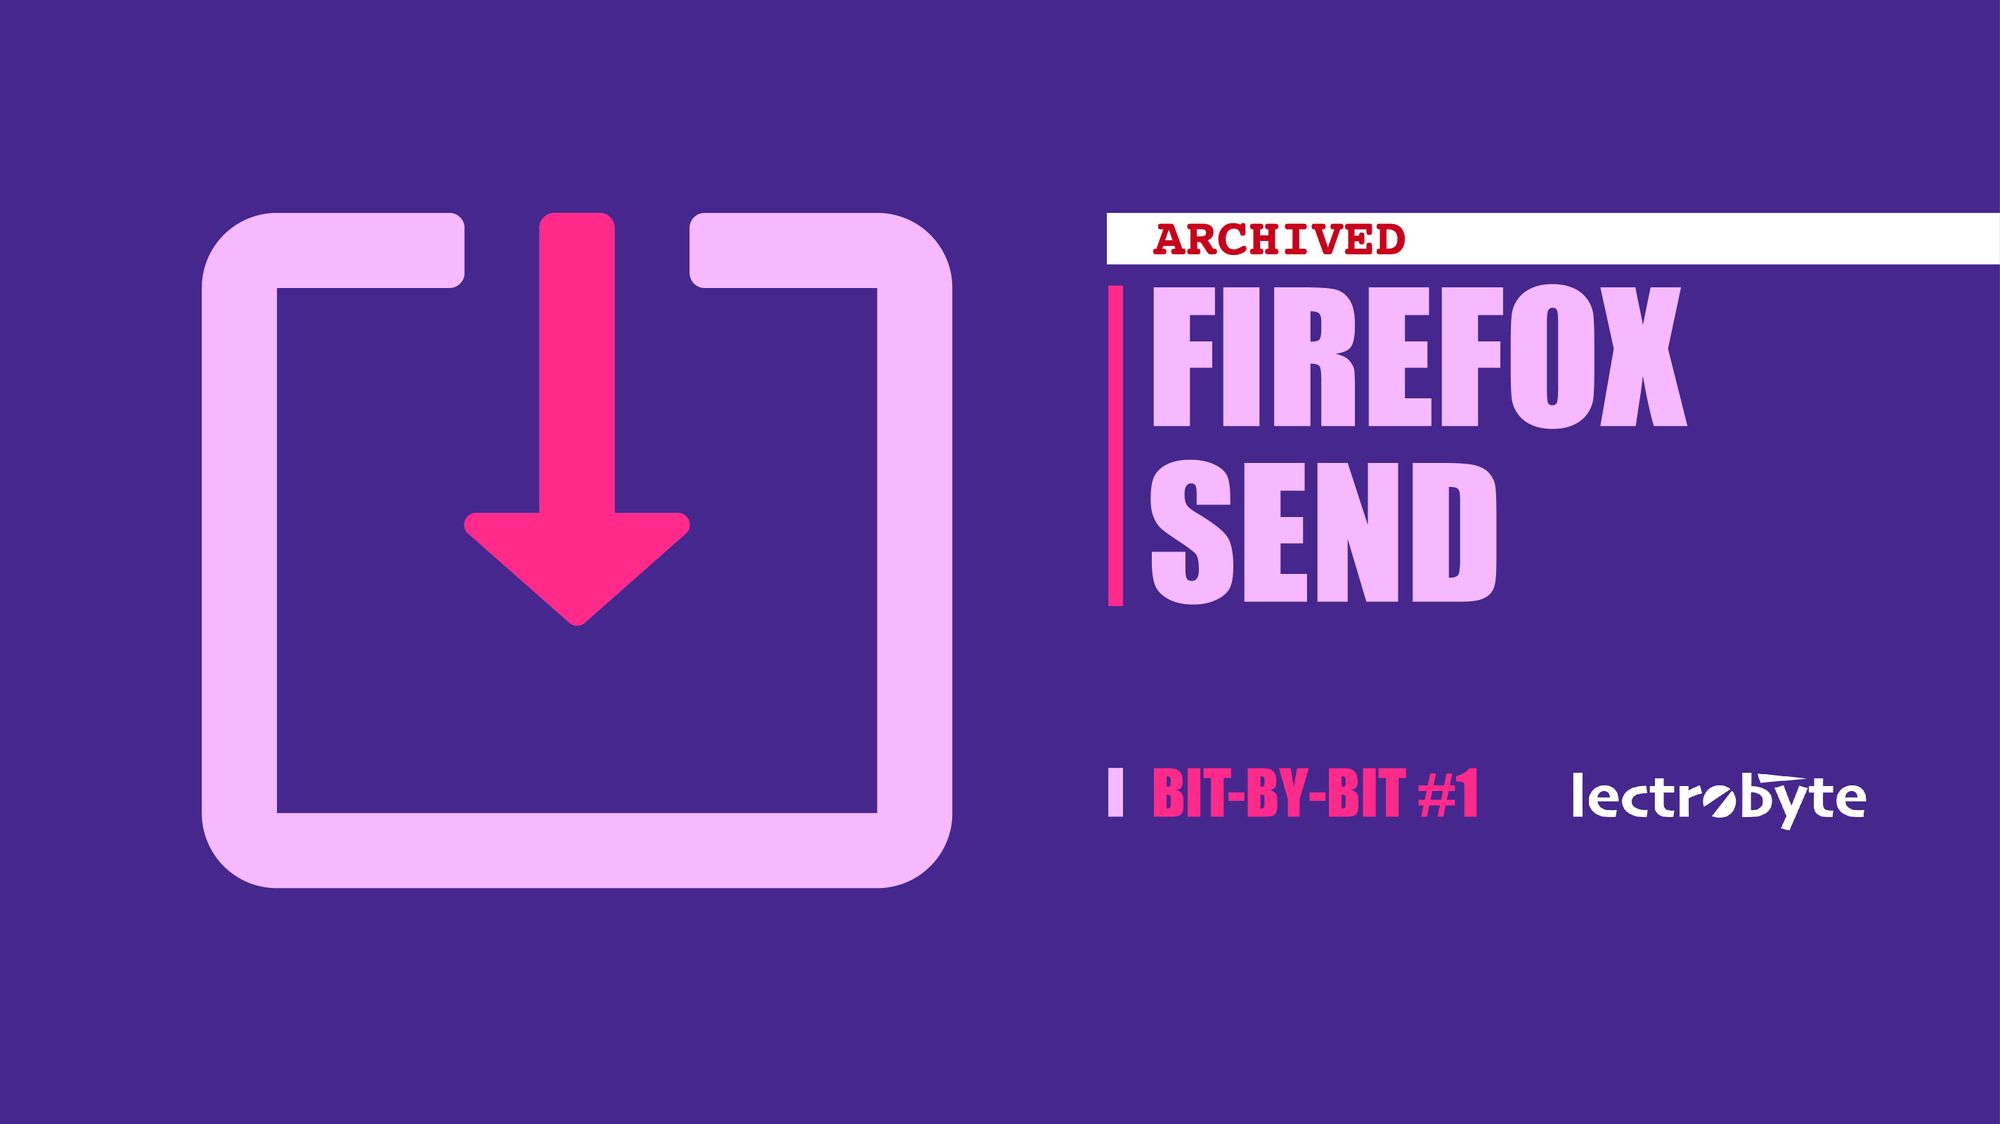 Bit-By-Bit #1 Firefox Send artwork. Icon by ProSymbols @ The Noun Project.